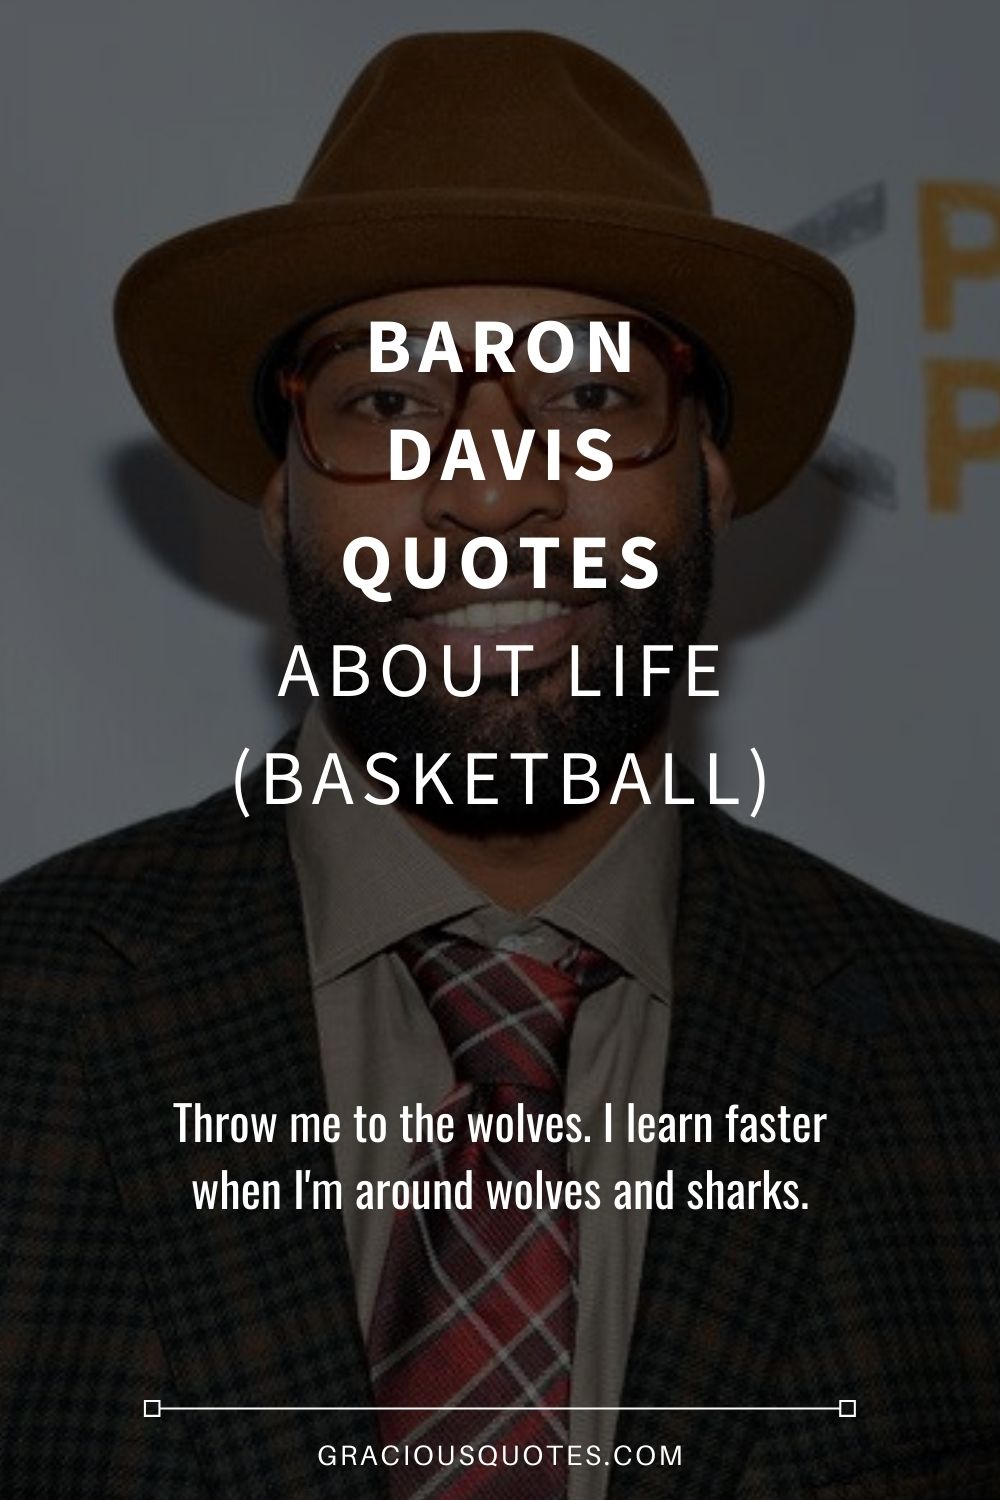 Baron Davis Quotes About Life (BASKETBALL) - Gracious Quotes